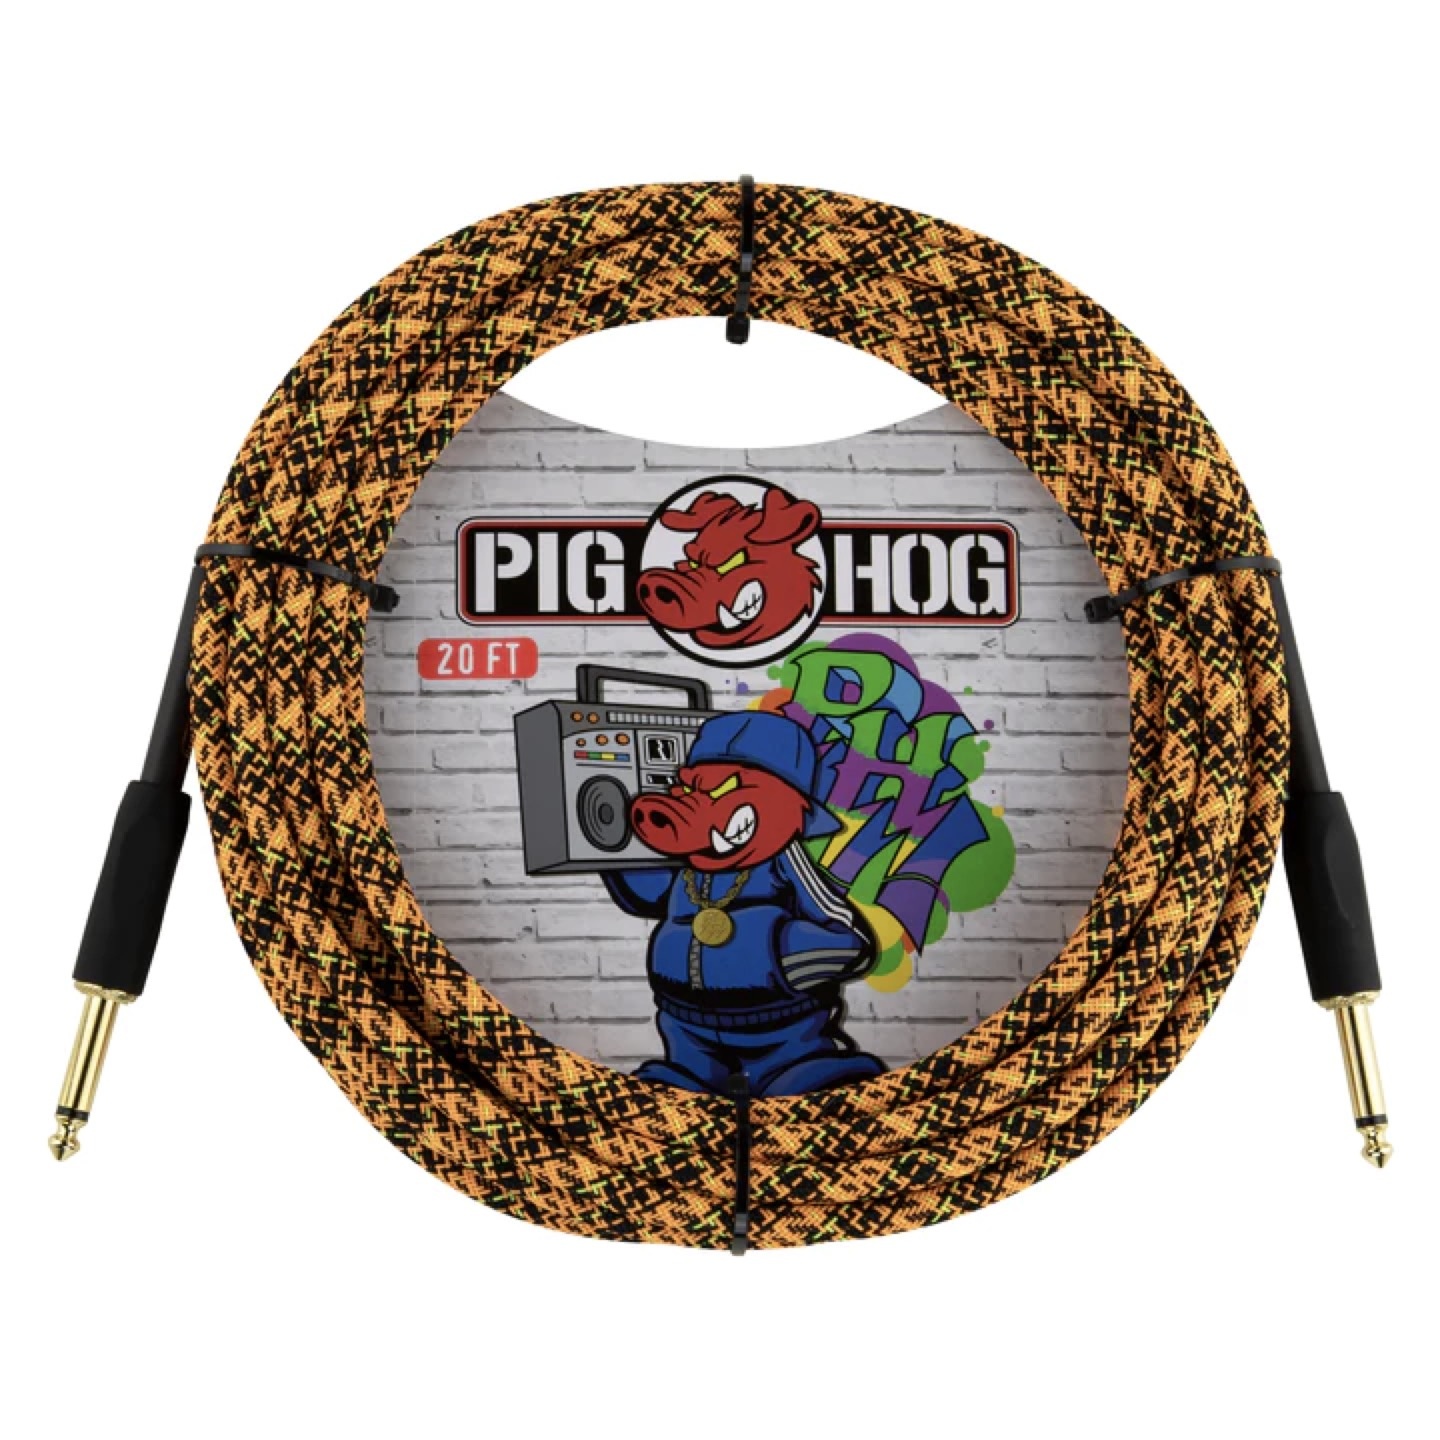 Pig Hog "Orange Graffiti" Woven Instrument Cable, 20-Foot, Straight, 1/4" Plugs